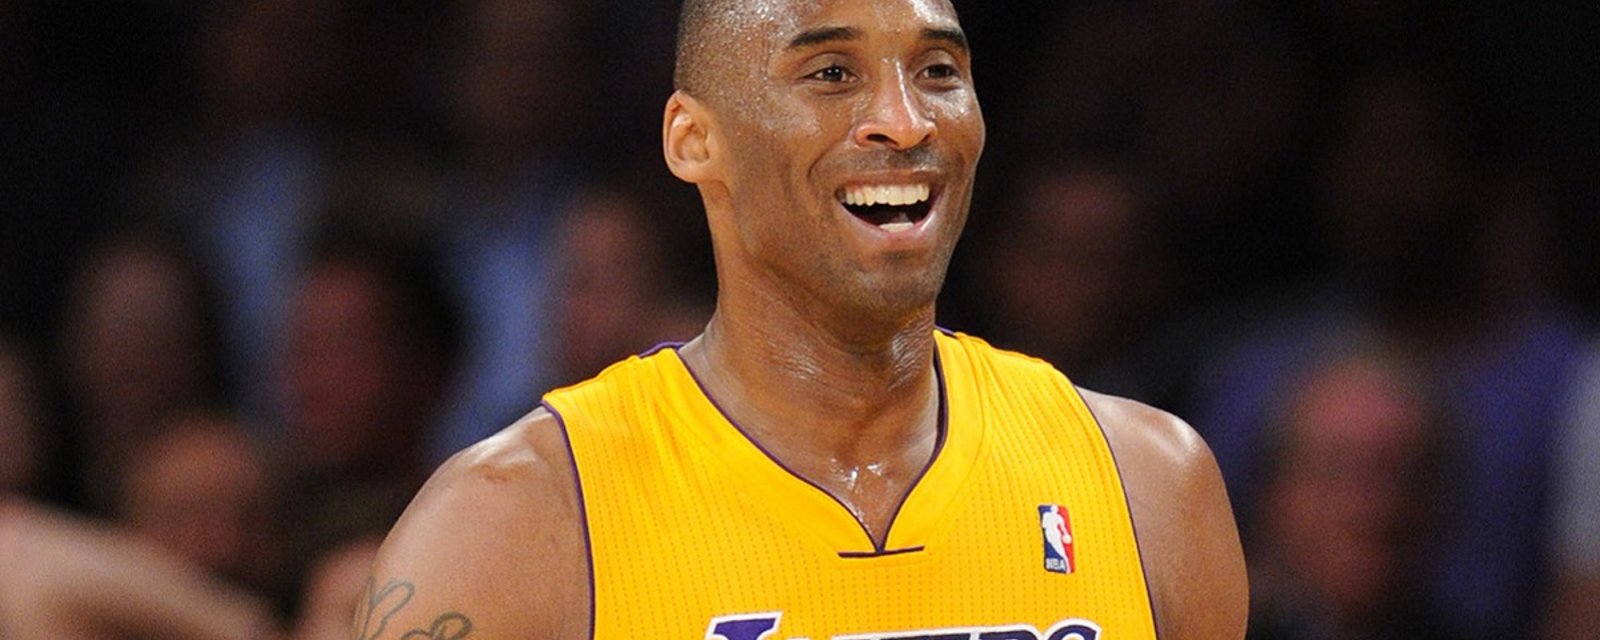 NBA Legend Kobe Bryant has been killed.